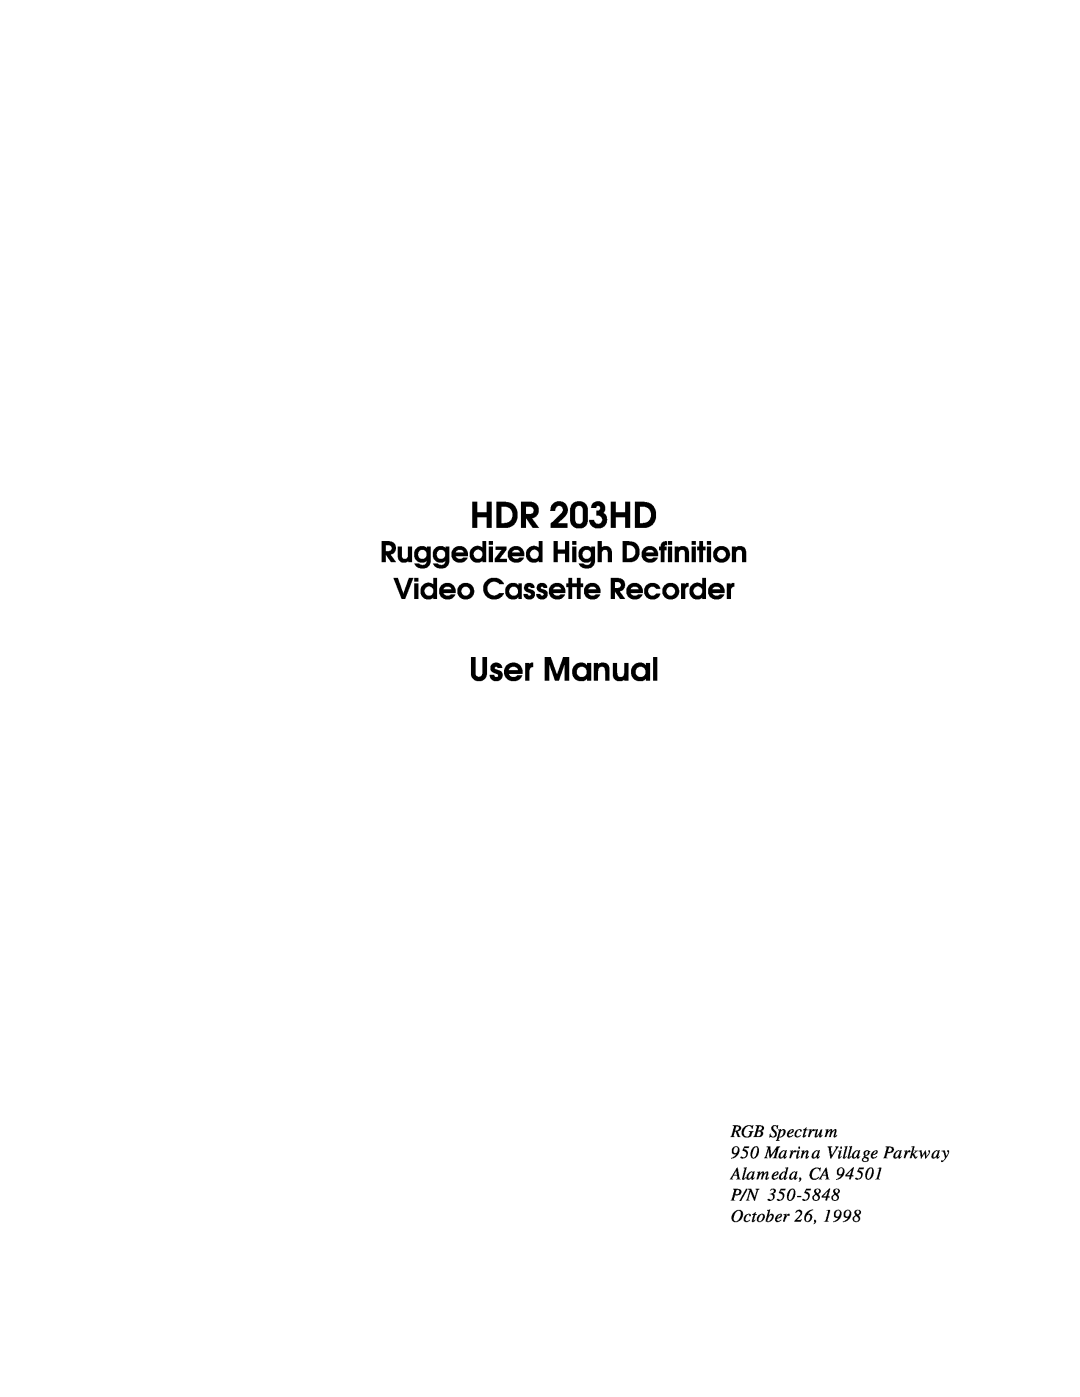 RGB Spectrum HDR 203HD user manual Ruggedized High Definition Video Cassette Recorder, User Manual 